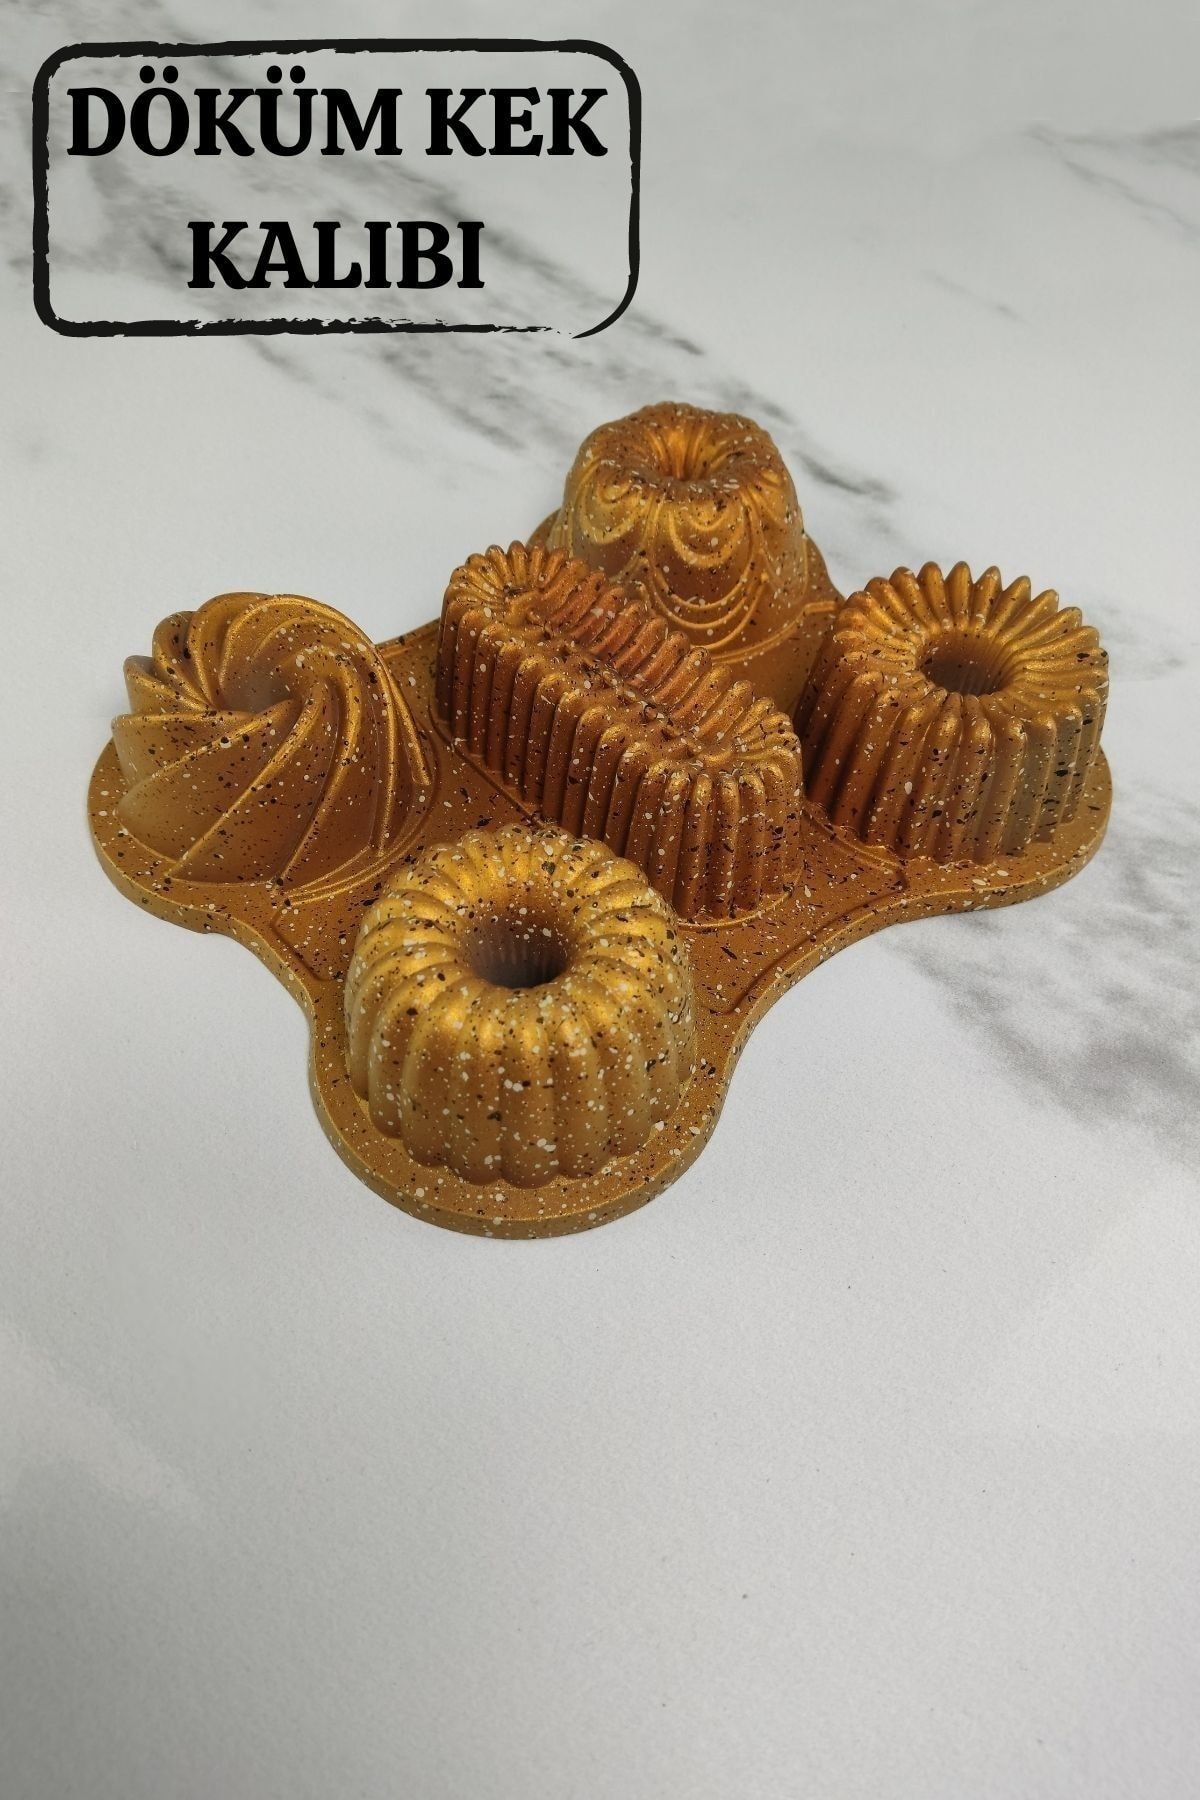 Digithome Döküm 5’li Muffin Kek Kalıbı Gold - Mnb05417 C1-1-154